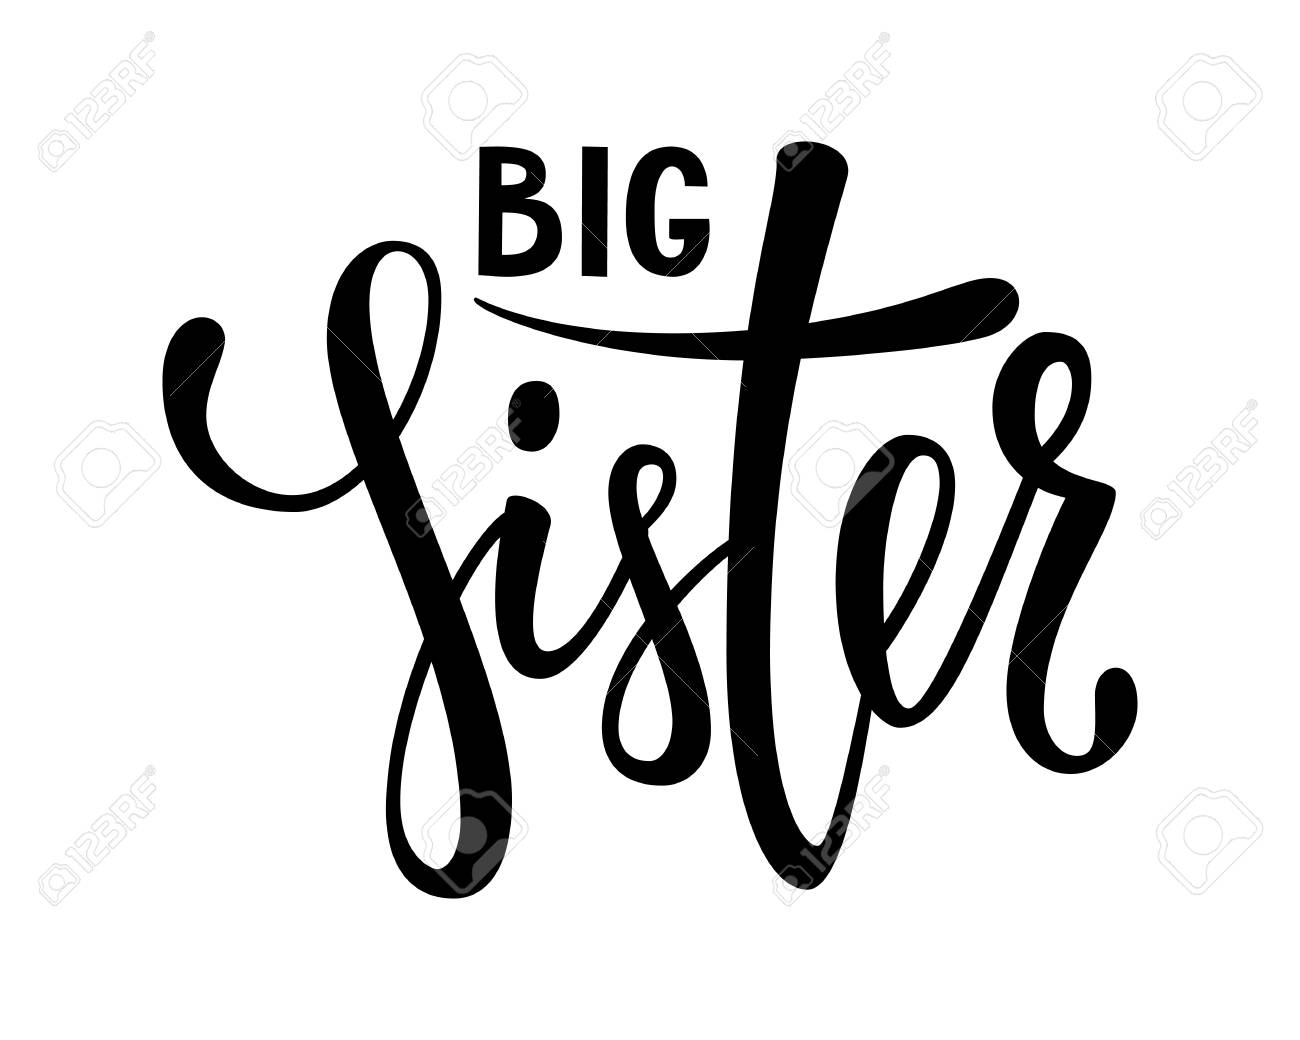 13 Big sister ideas  big sister sister wallpaper sisters